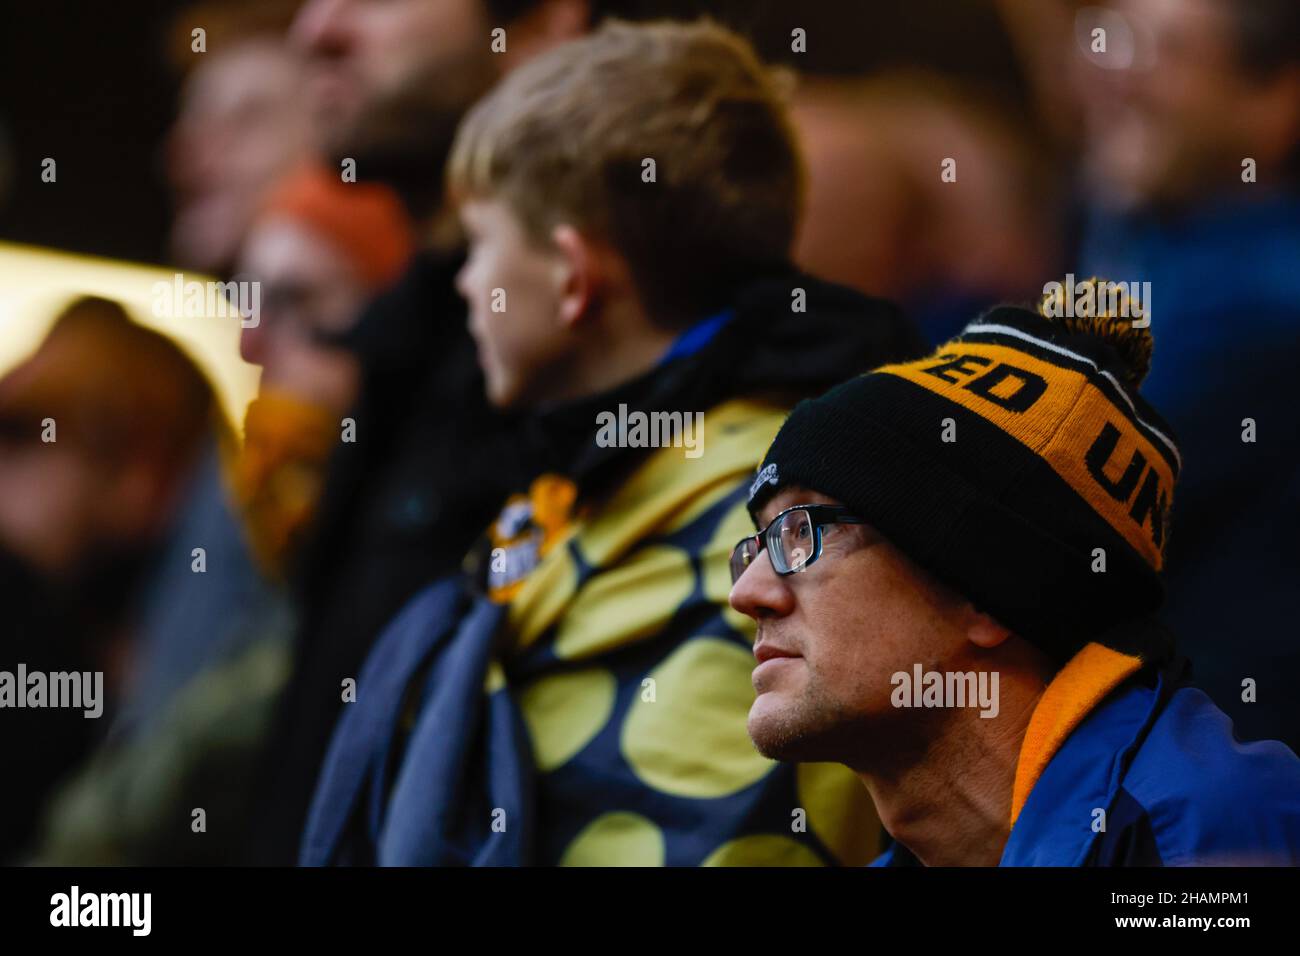 Cambridge United Fans während des Sky Bet League One Spiels im The Valley, London. Bilddatum: Samstag, 11. Dezember 2021. Stockfoto